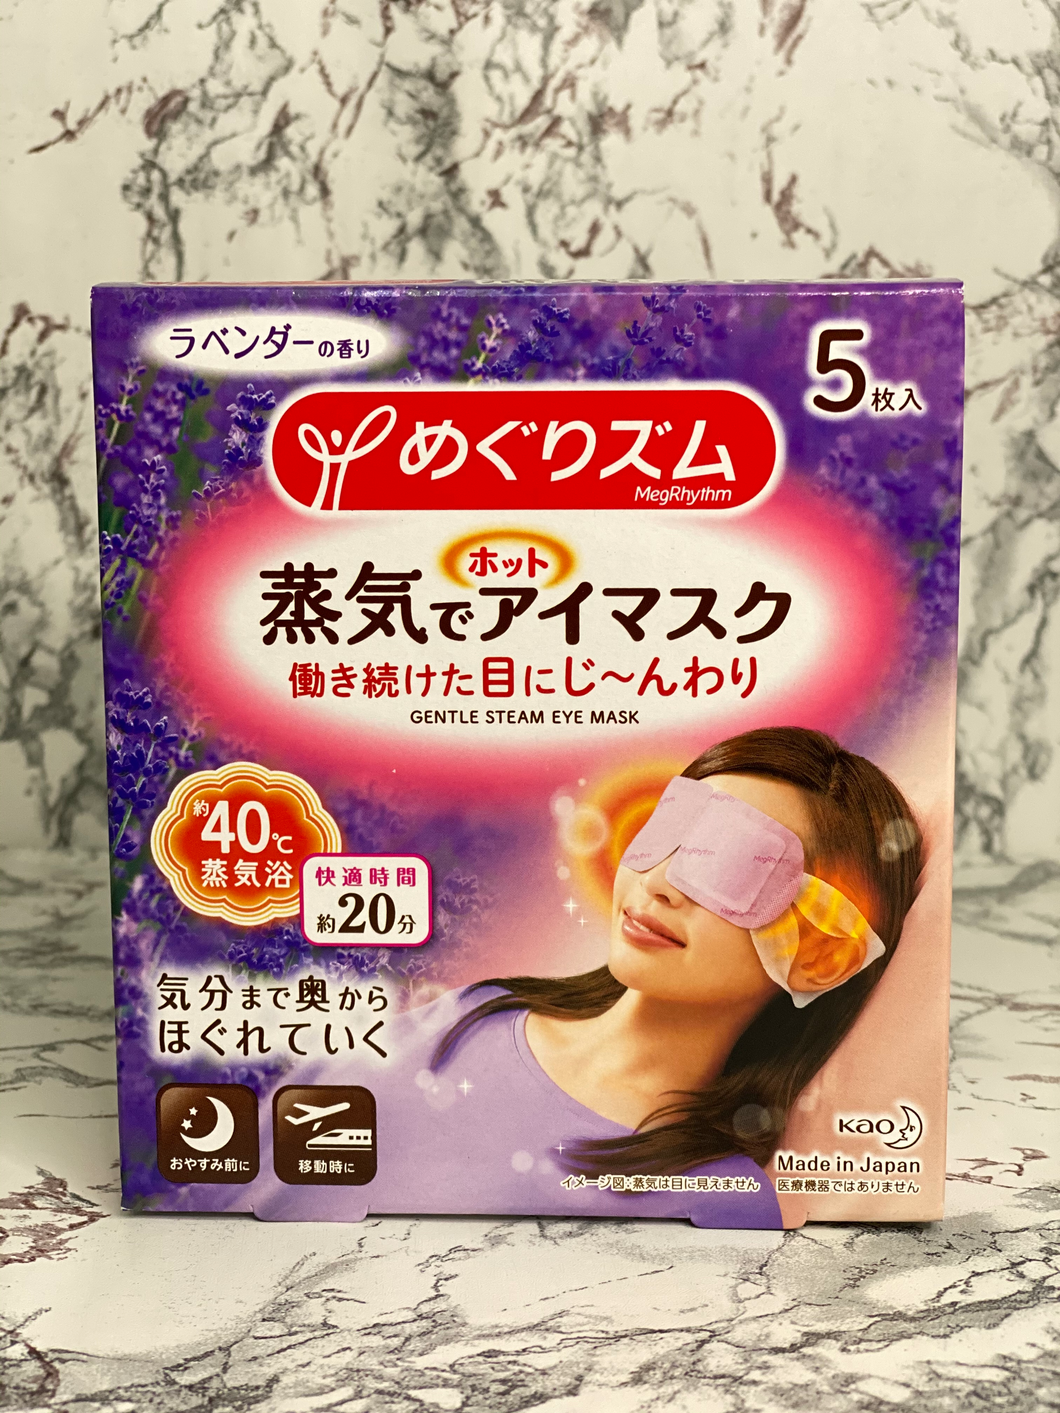 Megrythm Steam Eyemask 5pcs Lavender